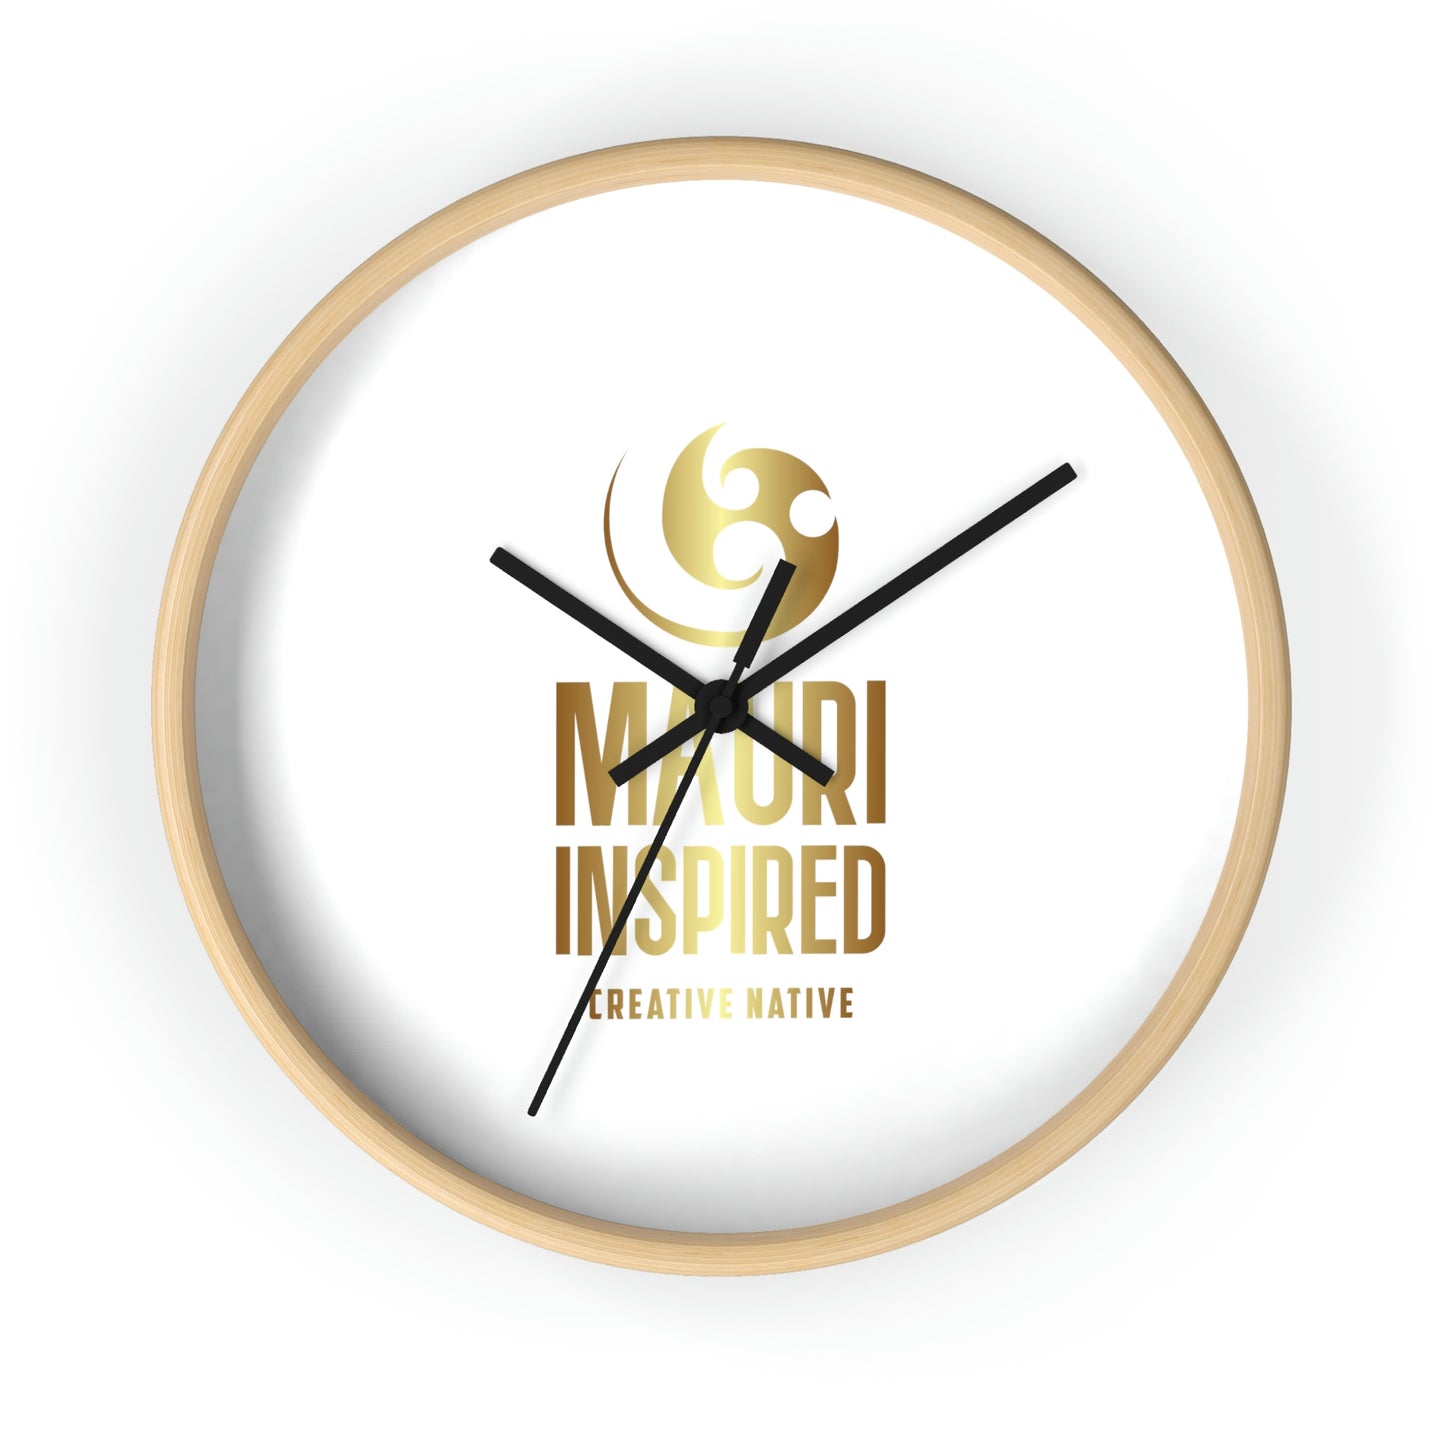 Mauri Inspired - Wall clock